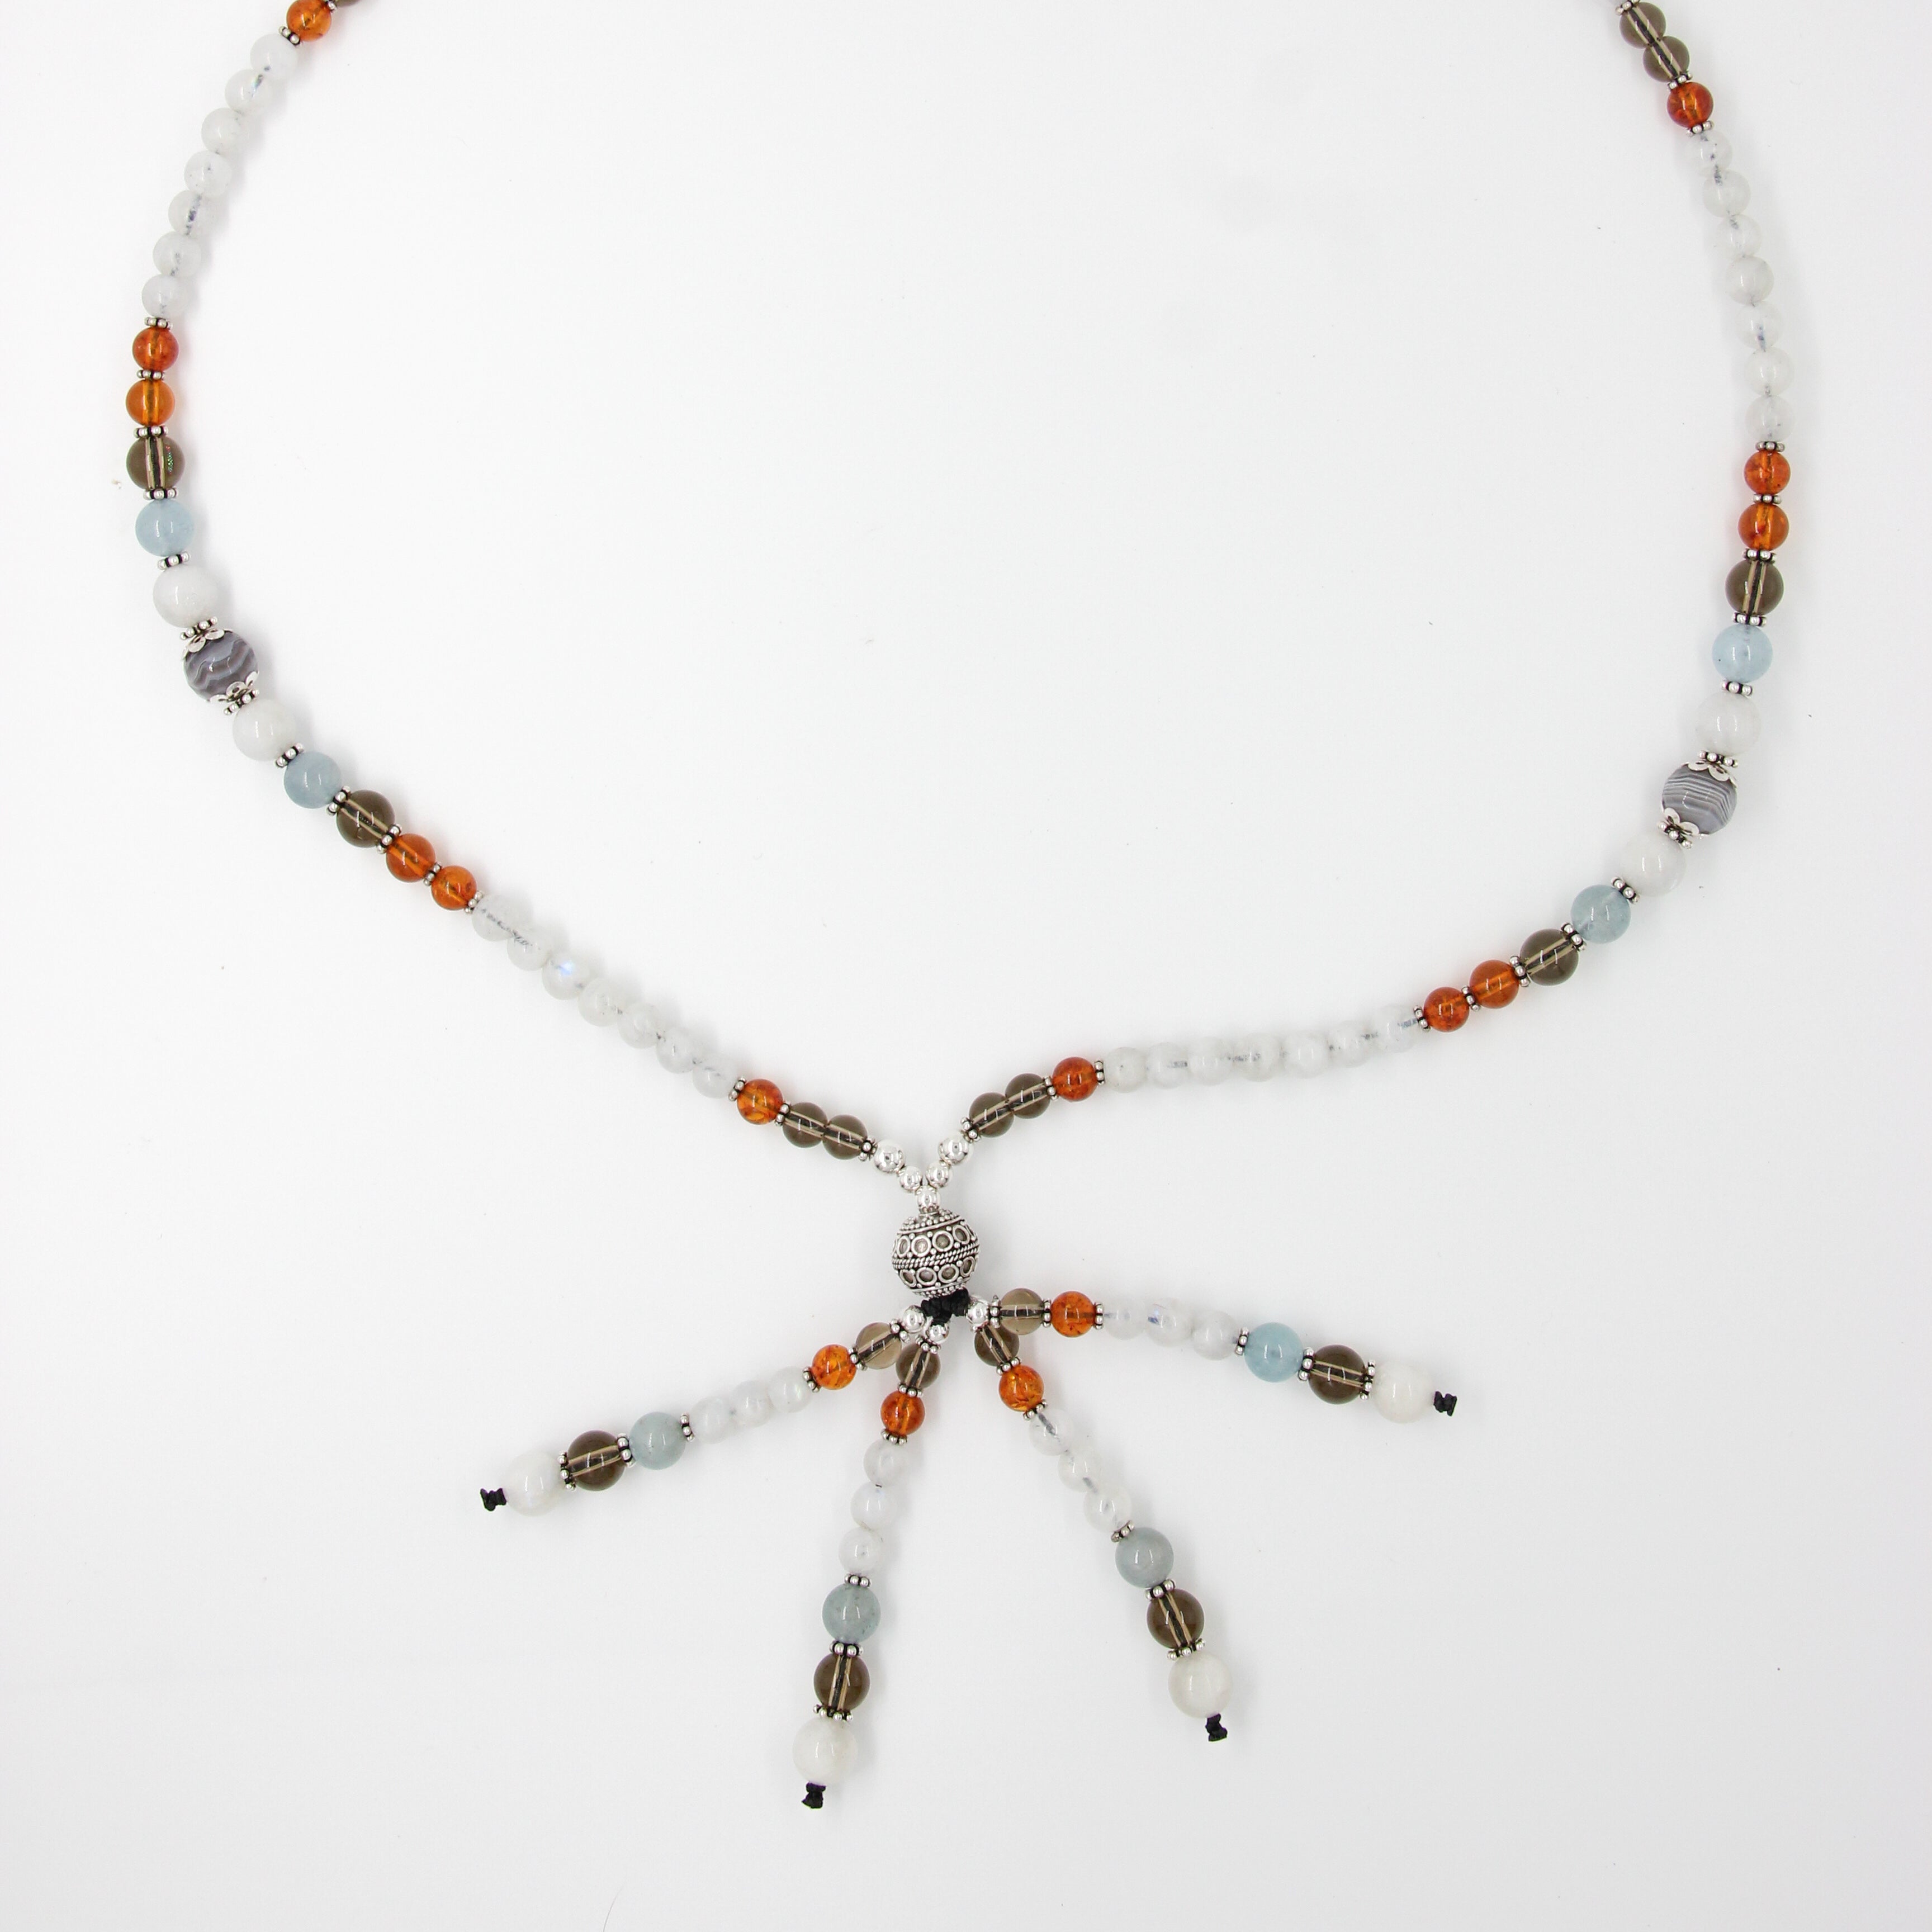 Rainbow Moon Stone Necklace with Amber, Aquamarine, Agate, Smokey Quartz and Silver Beads